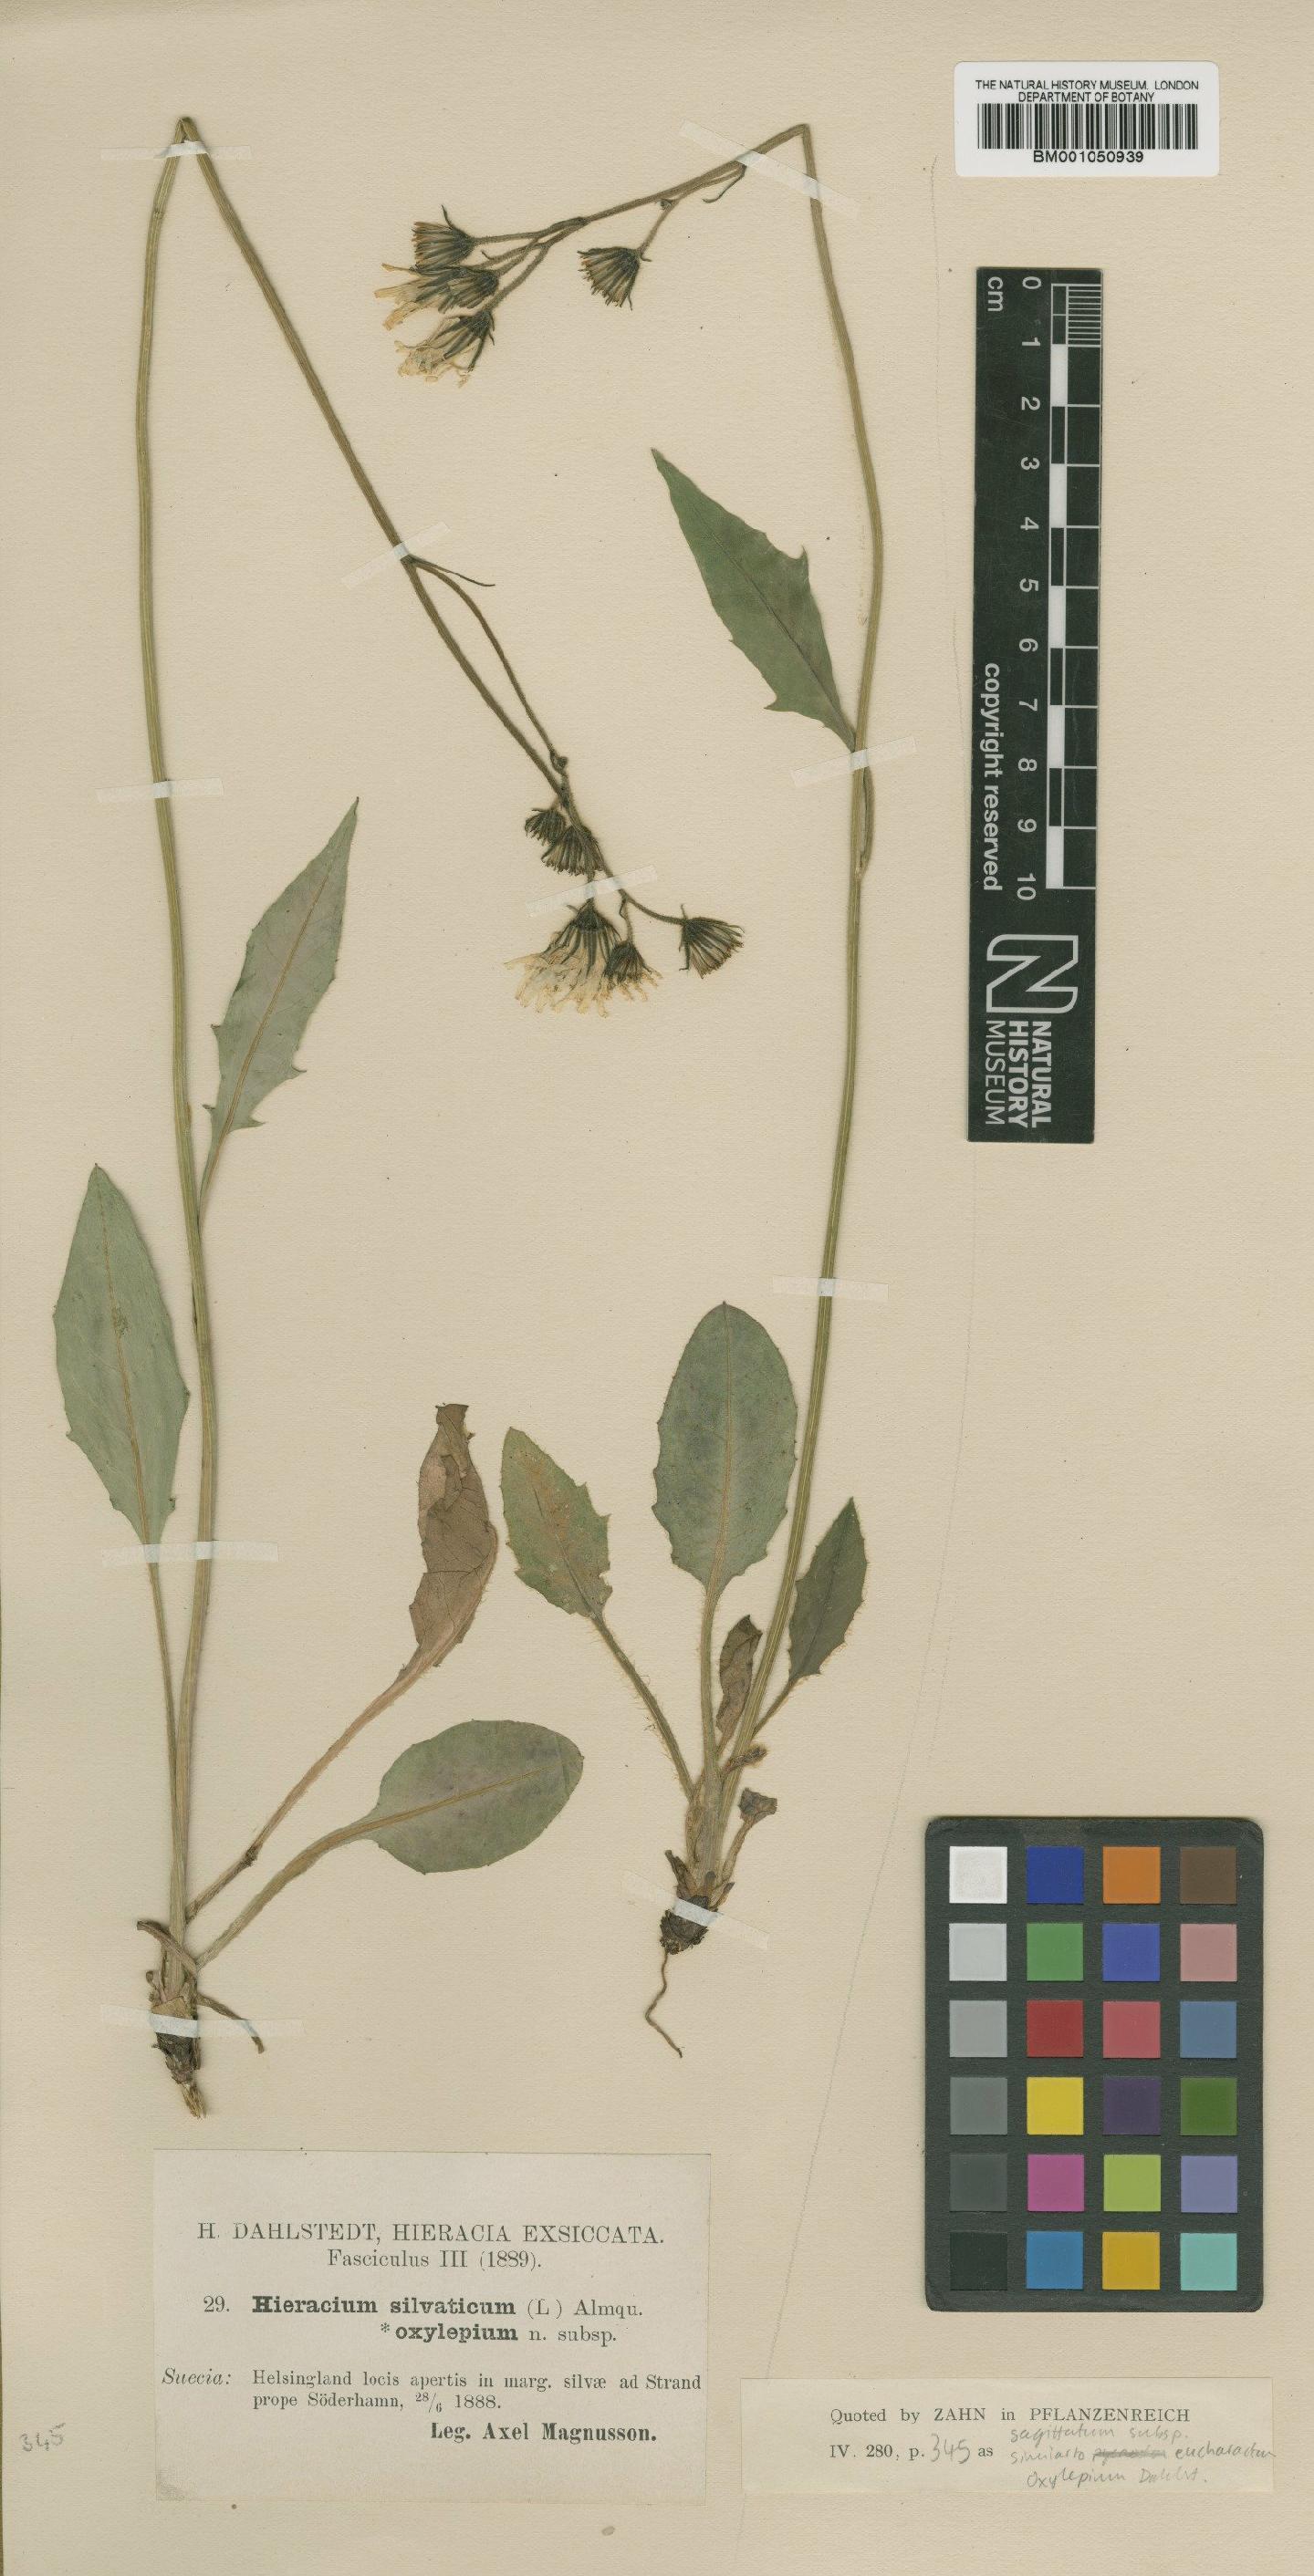 To NHMUK collection (Hieracium sagittatum subsp. oxylepium (Dahlst.) Zahn; TYPE; NHMUK:ecatalogue:2413603)